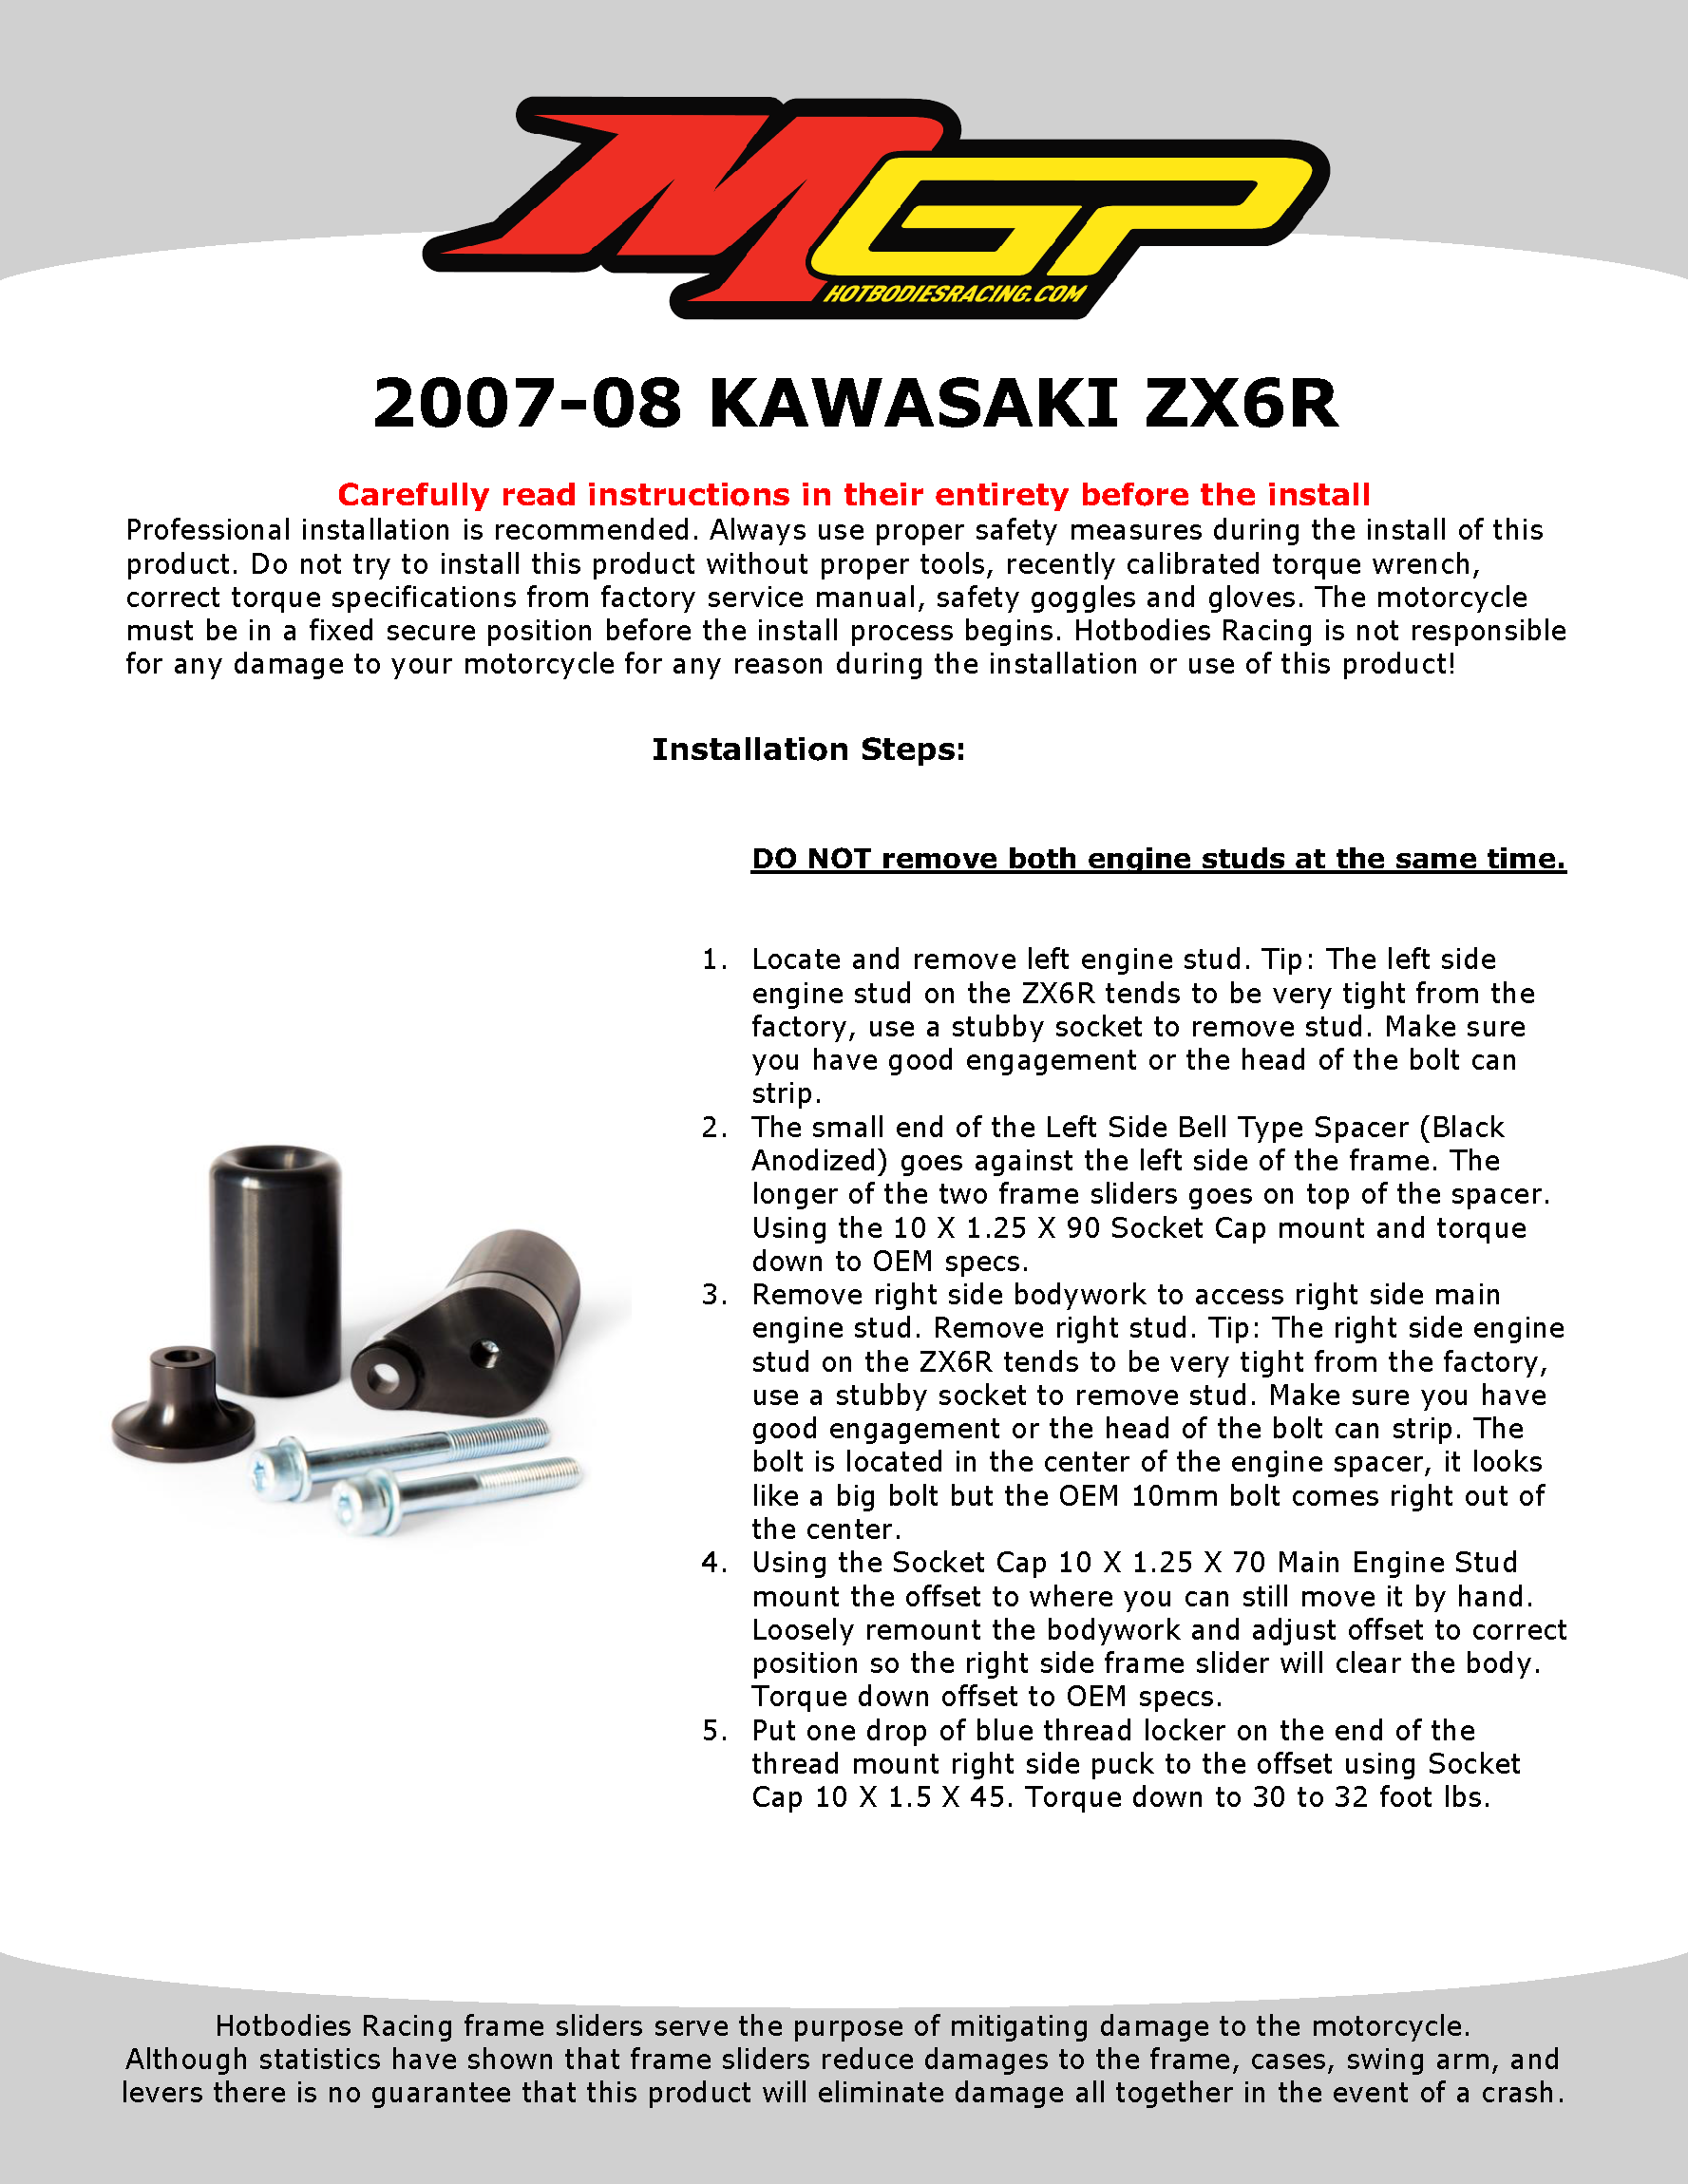 ZX6R 2007-08 Frame Sliders